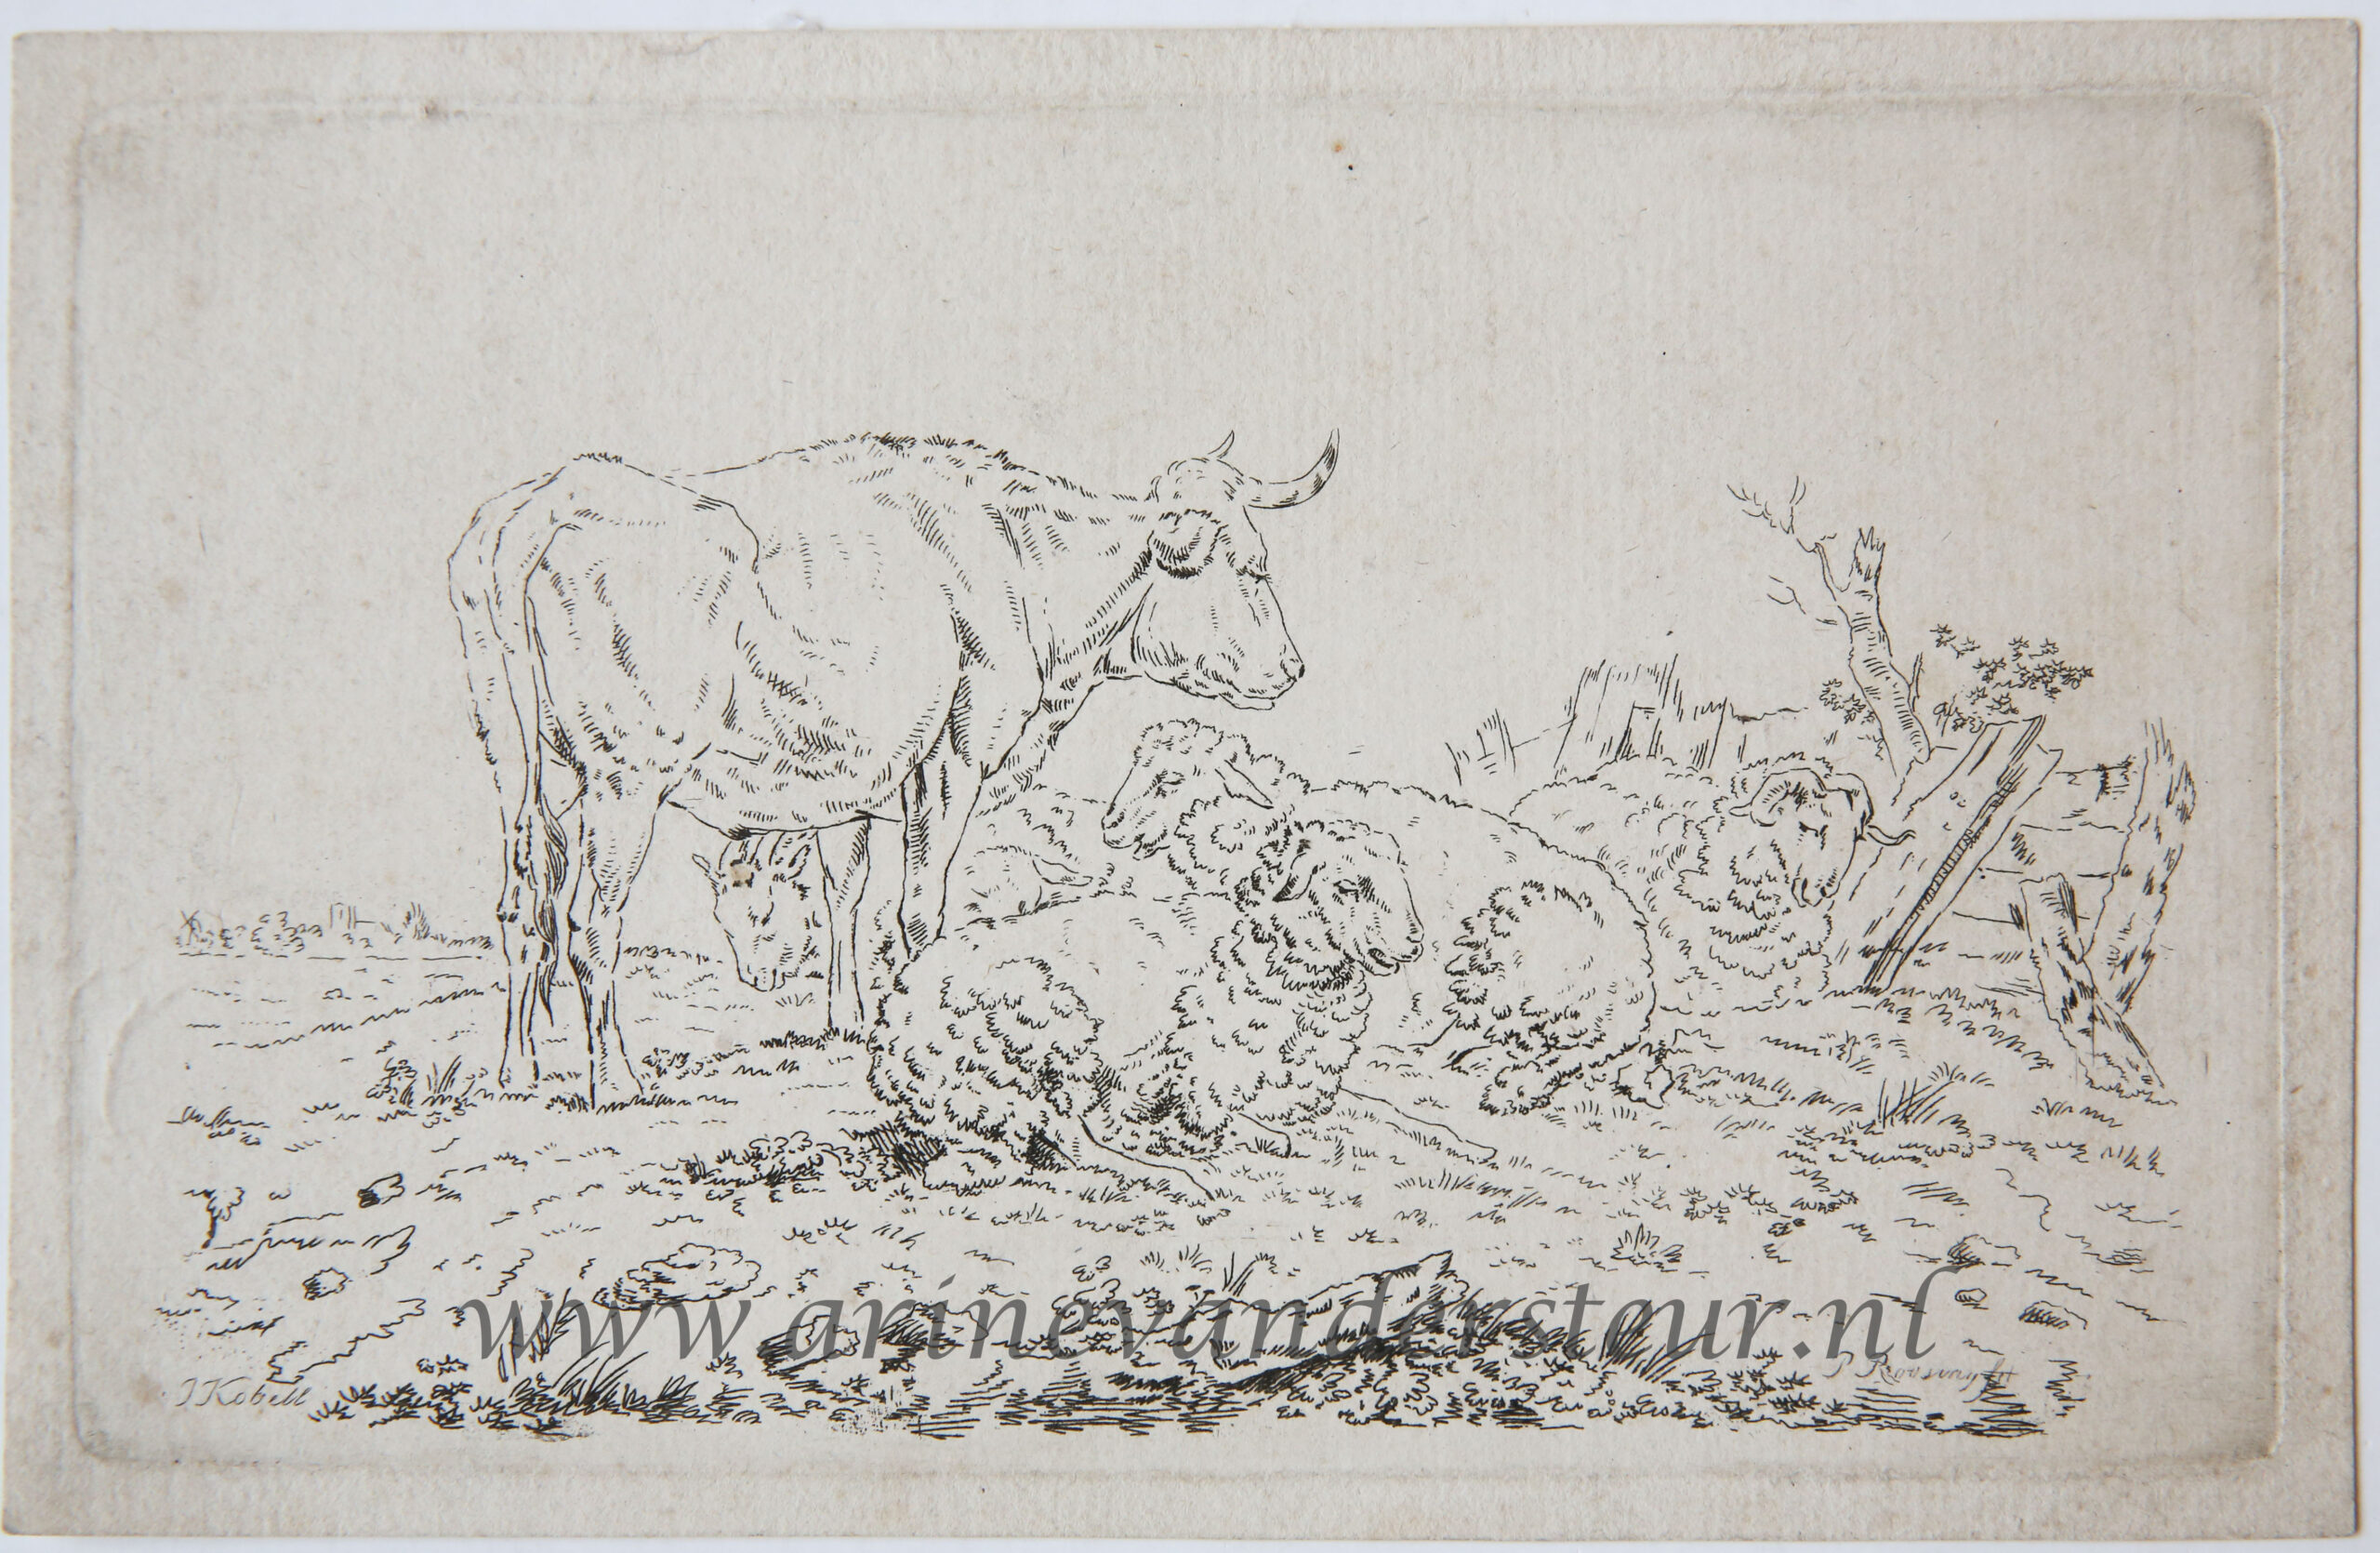 [Original etching, ets] P. Roosing after J. Kobell II. Cow and sheep in a meadow (koe en schaap in de wei), published 1800-1850.